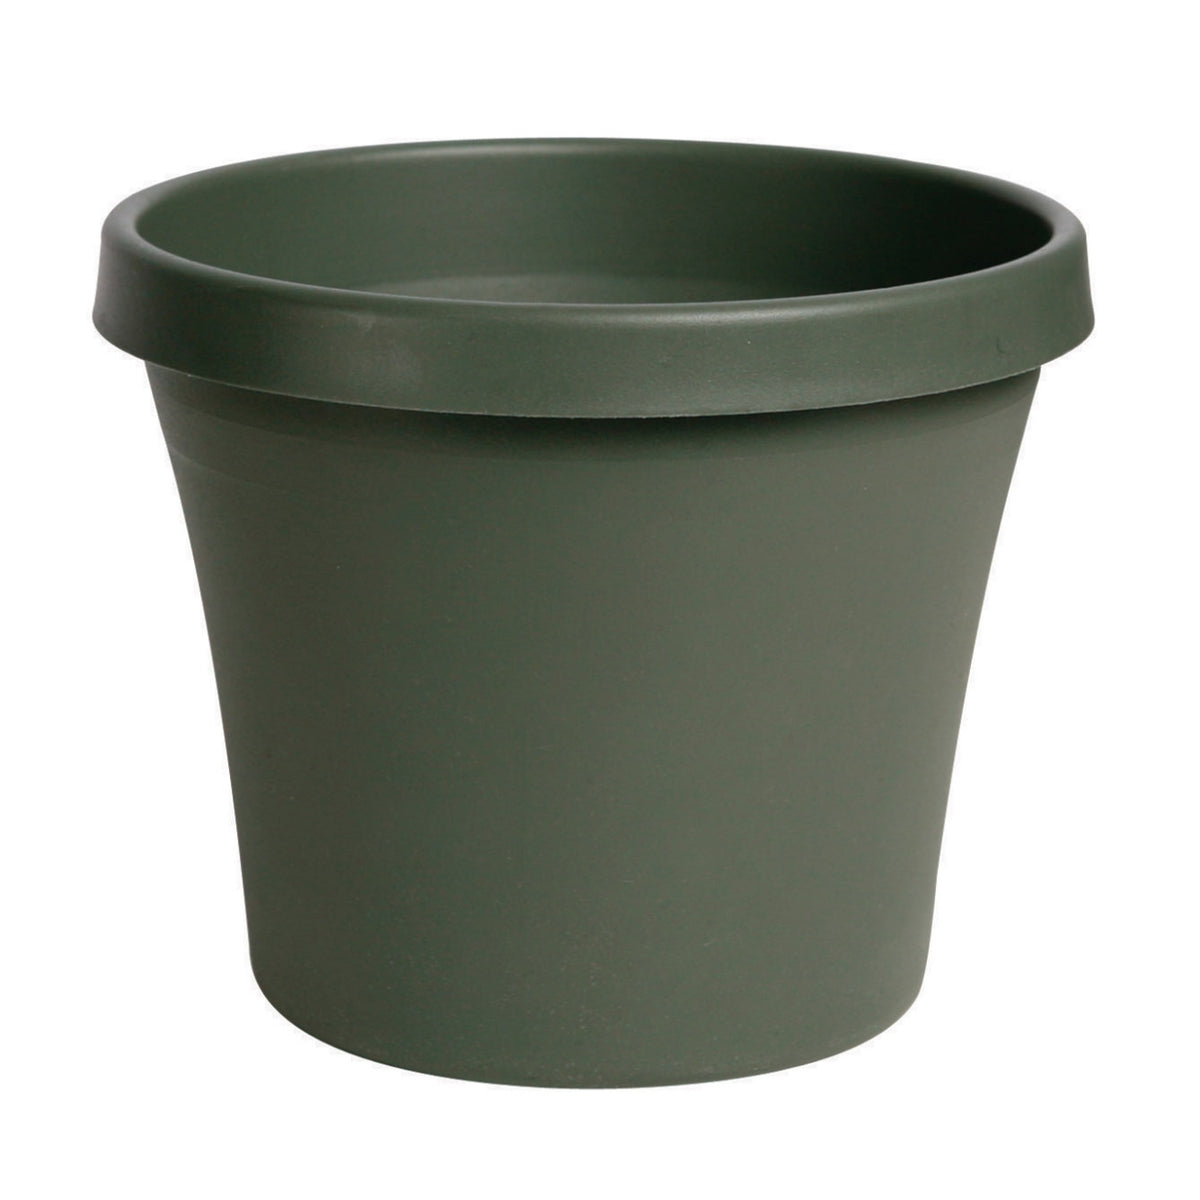 buy plant pots at cheap rate in bulk. wholesale & retail landscape edging & fencing store.